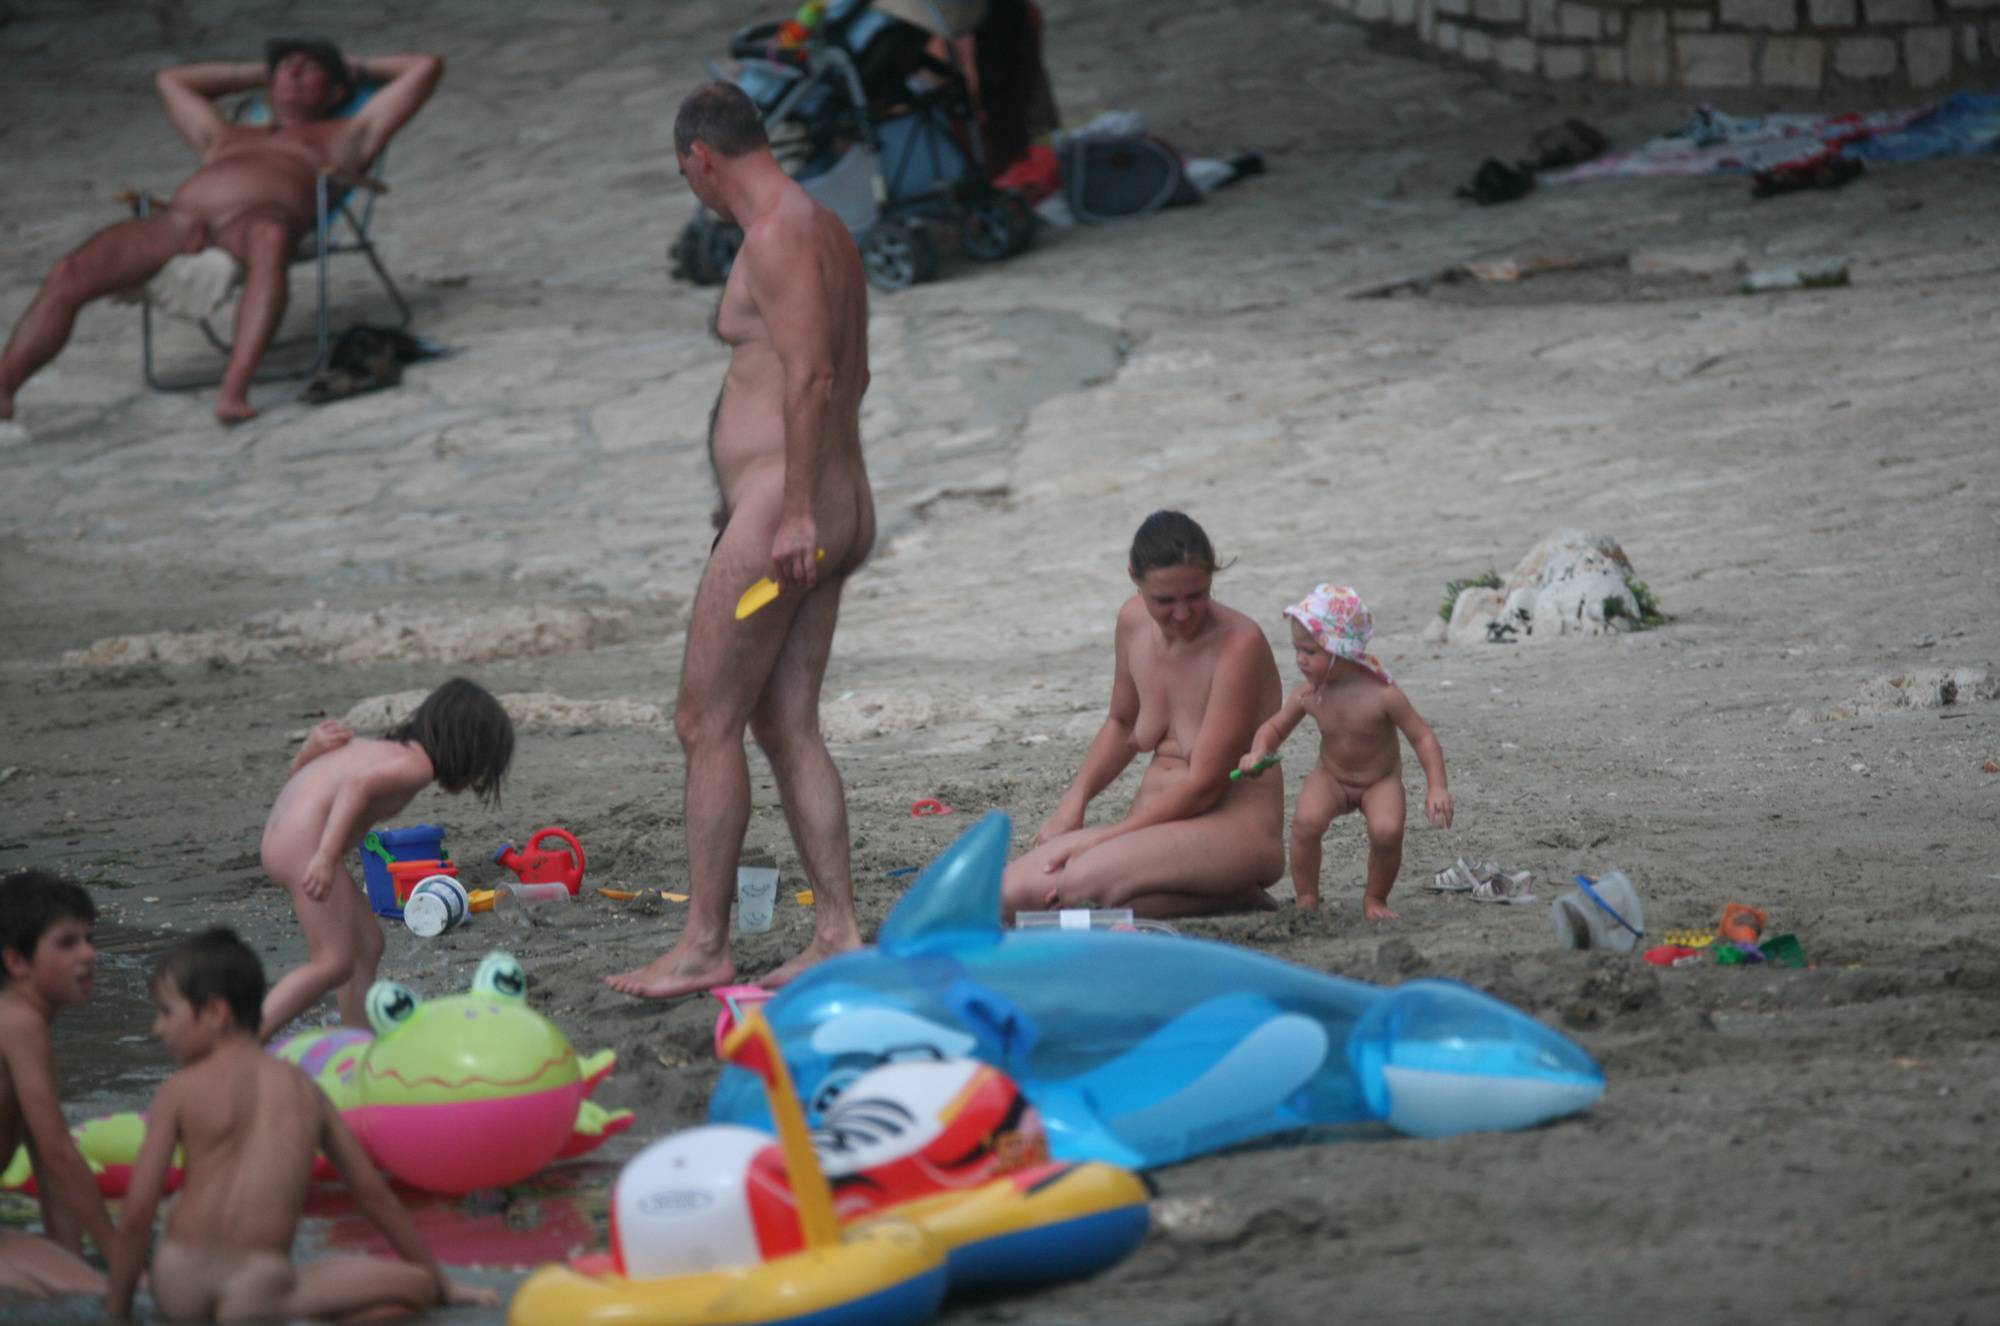 Nude Beach Assortment - 2